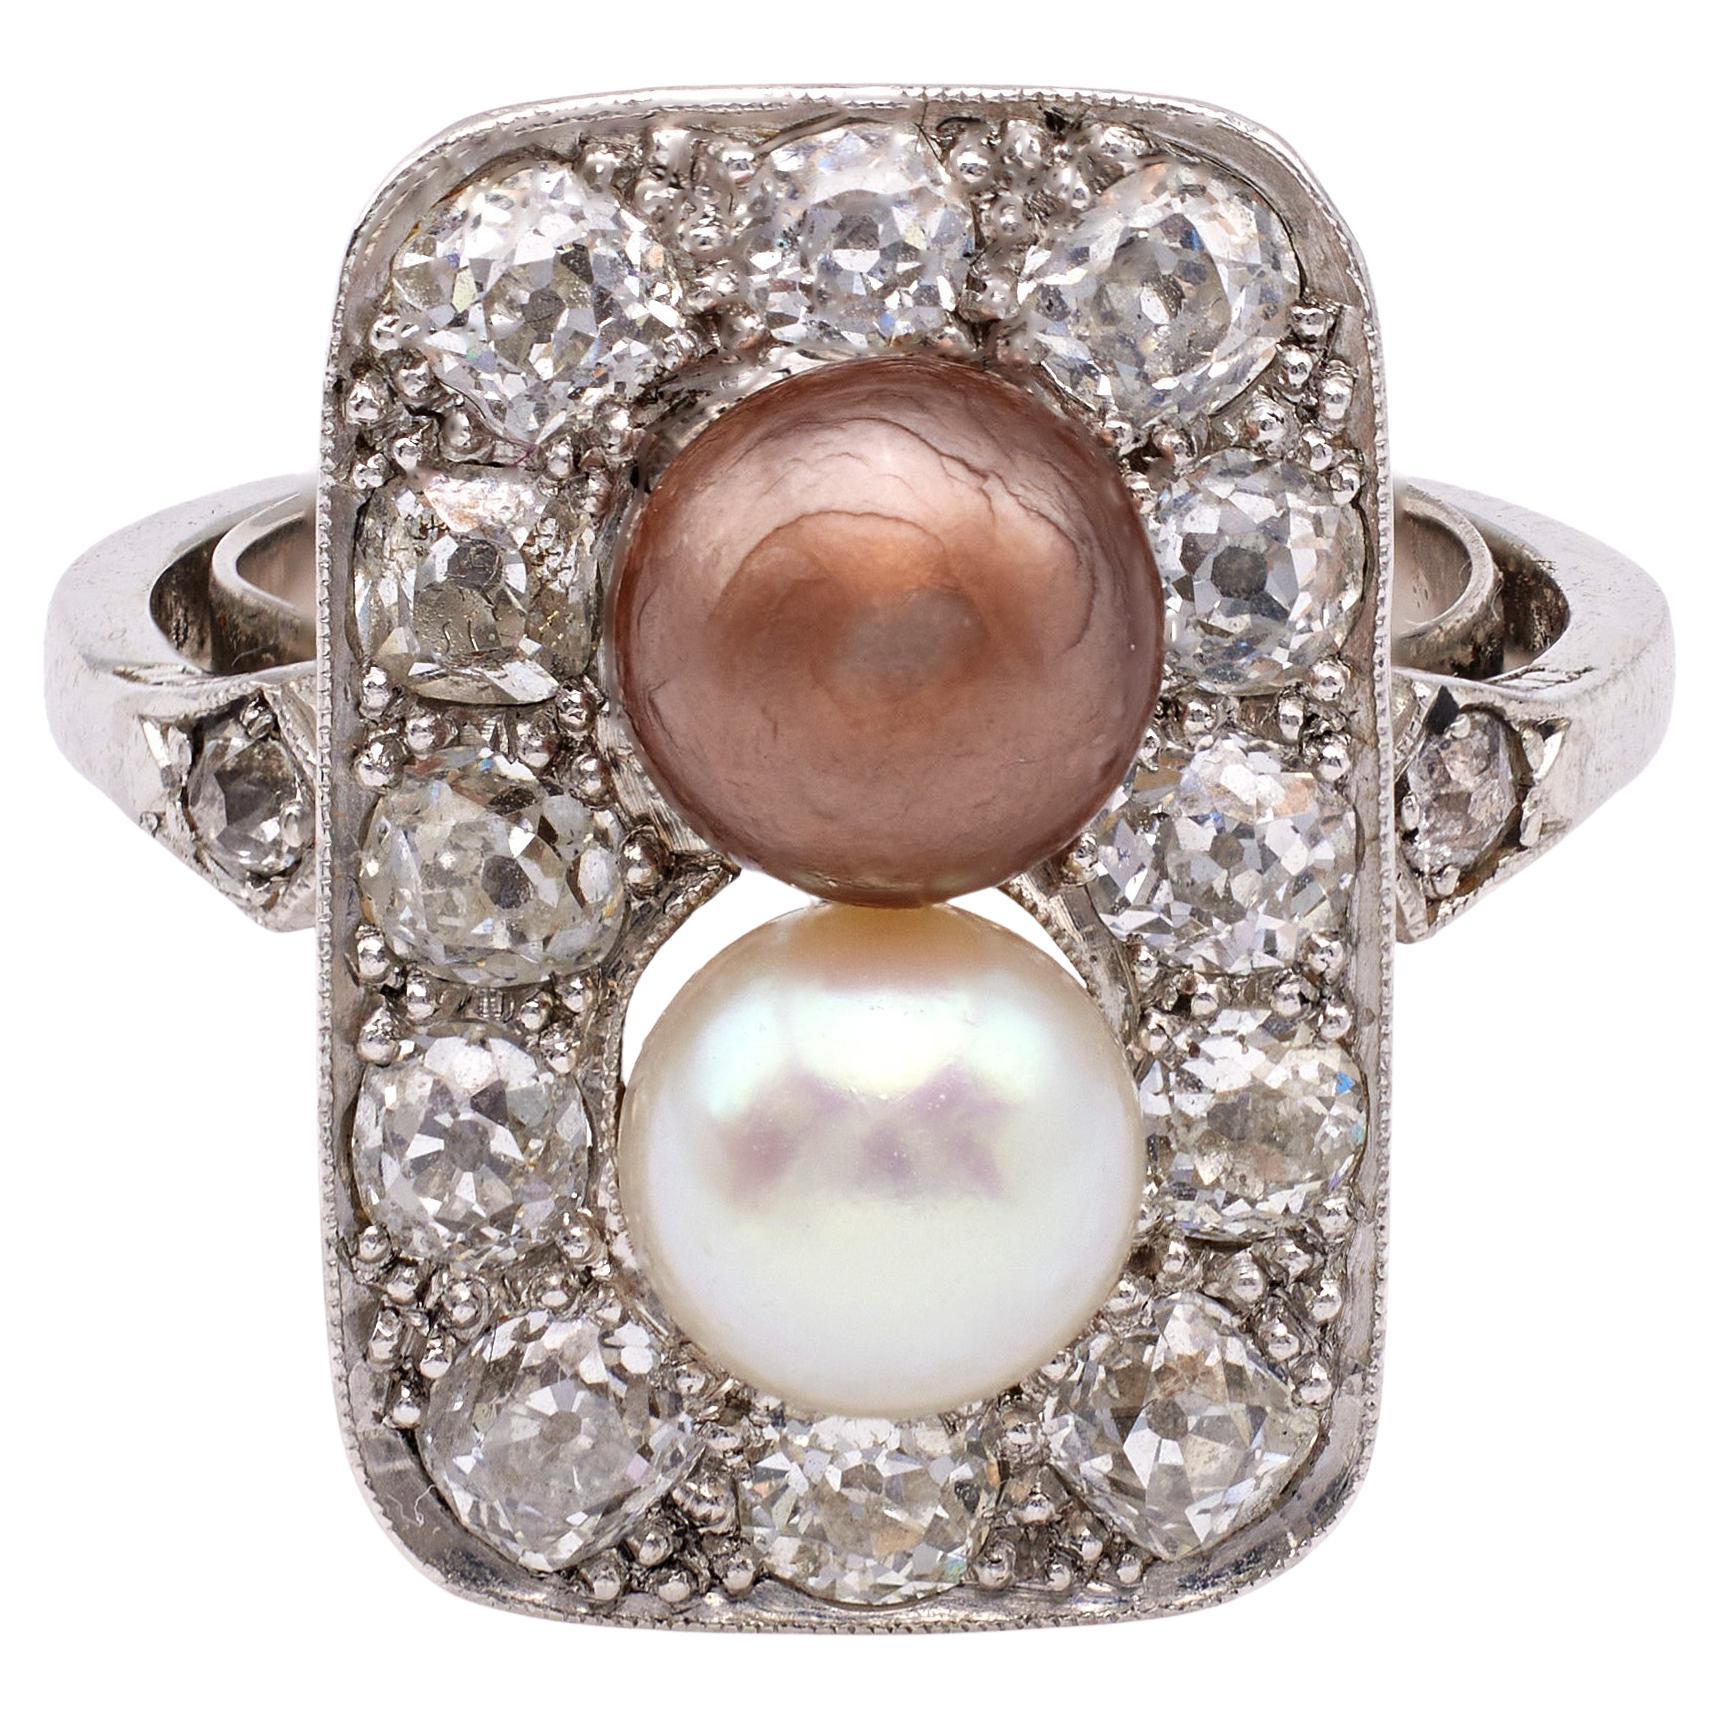 Edwardian Pearl and Diamond Platinum Ring.